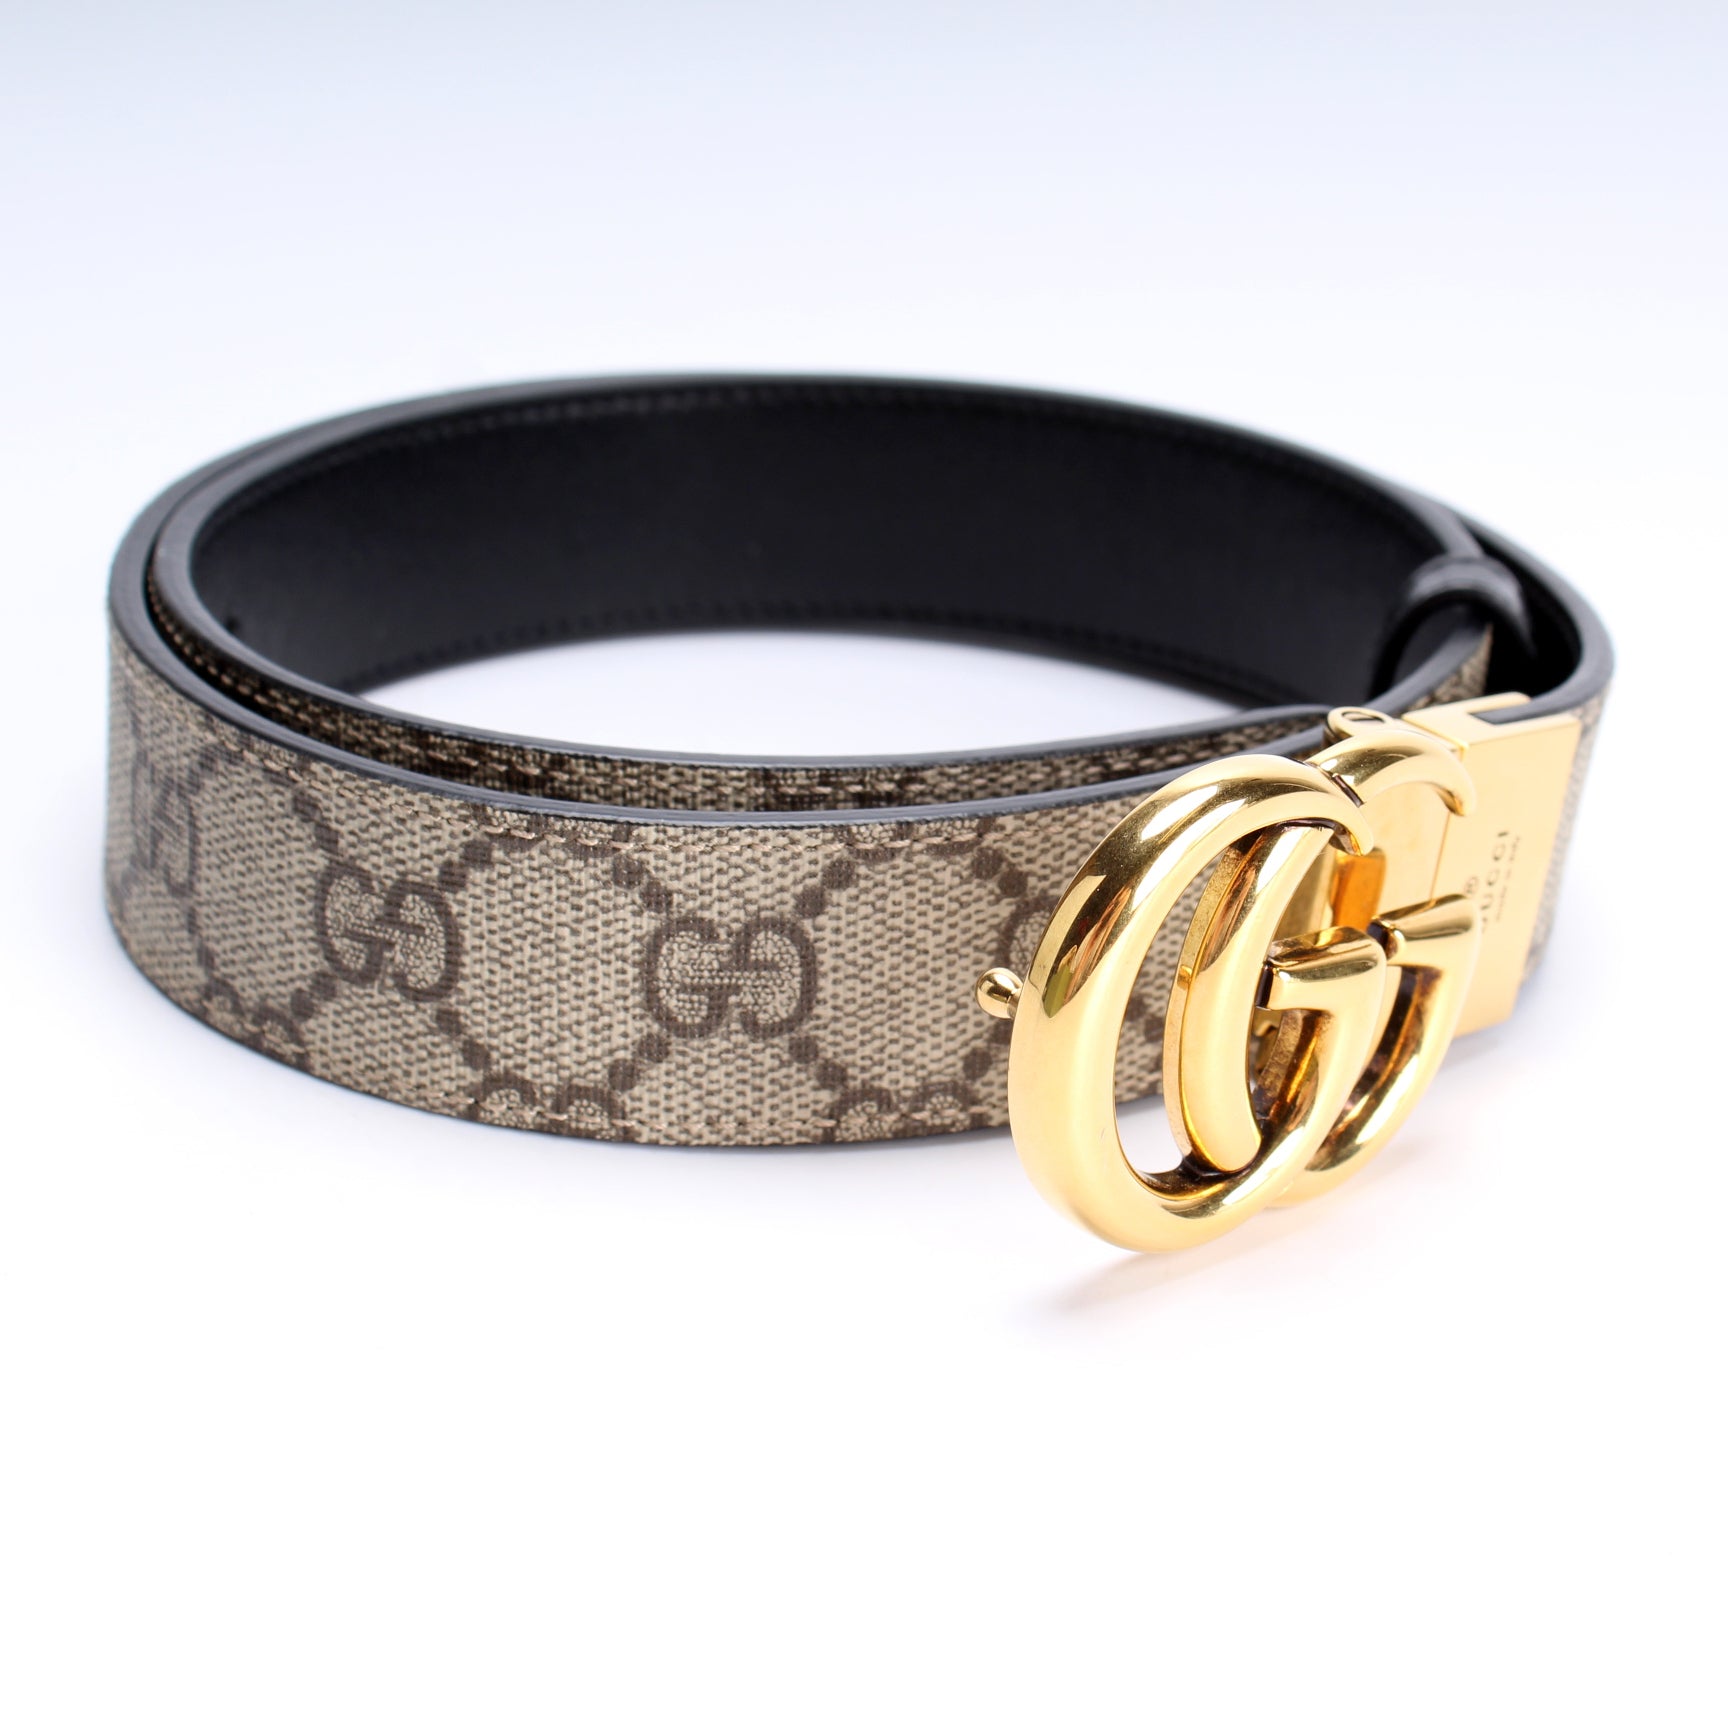 Reversible GG Supreme Leather Belt in Multicoloured - Gucci